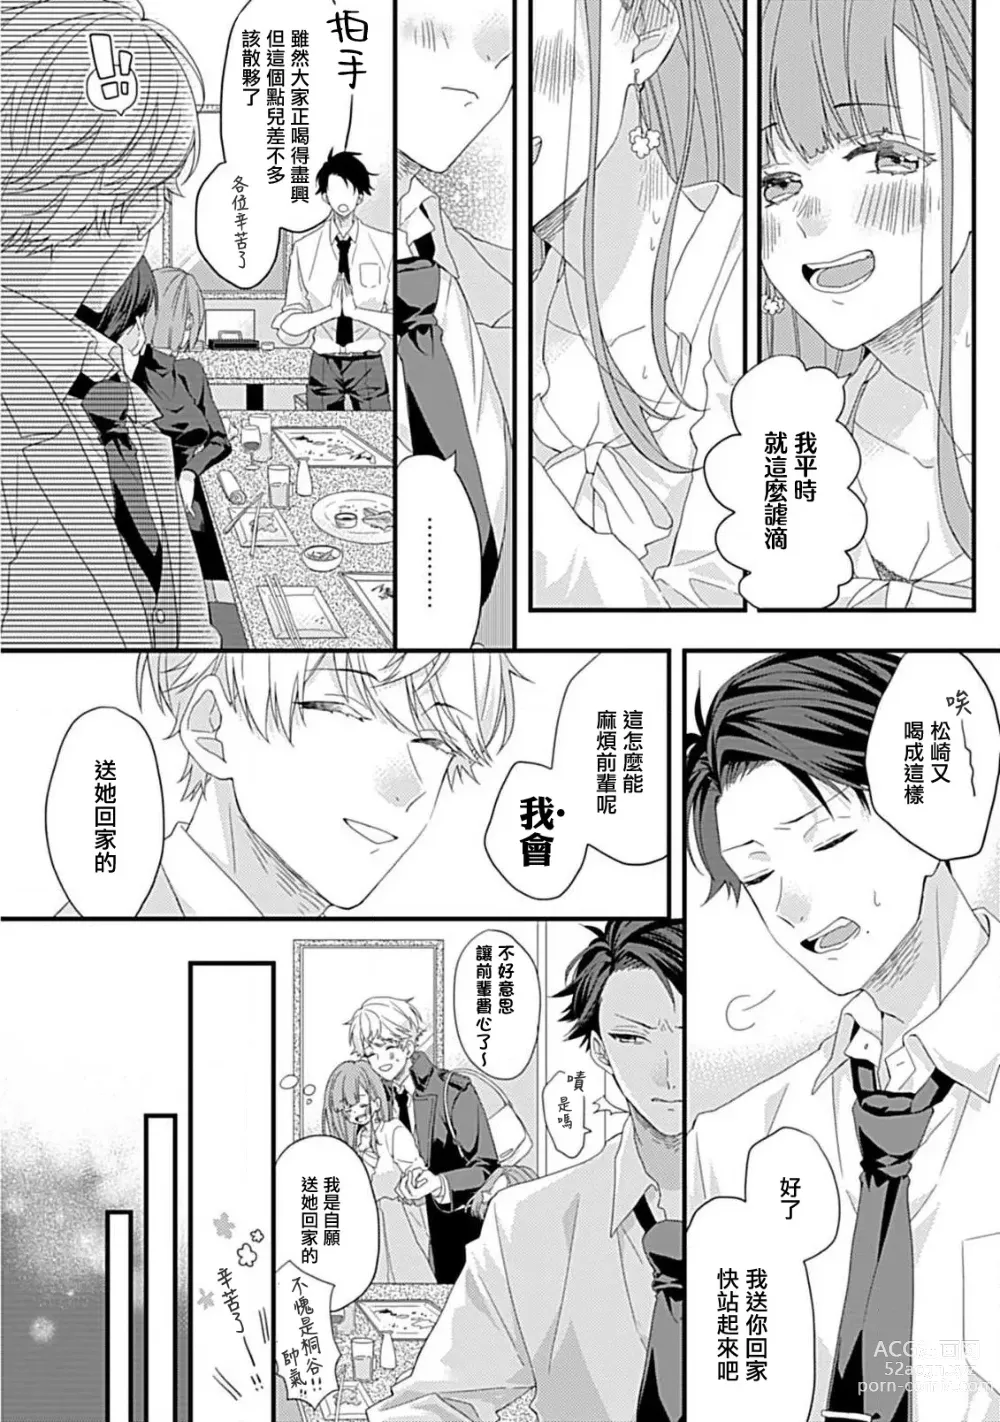 Page 9 of manga 辛德瑞拉综合征与溺爱王子